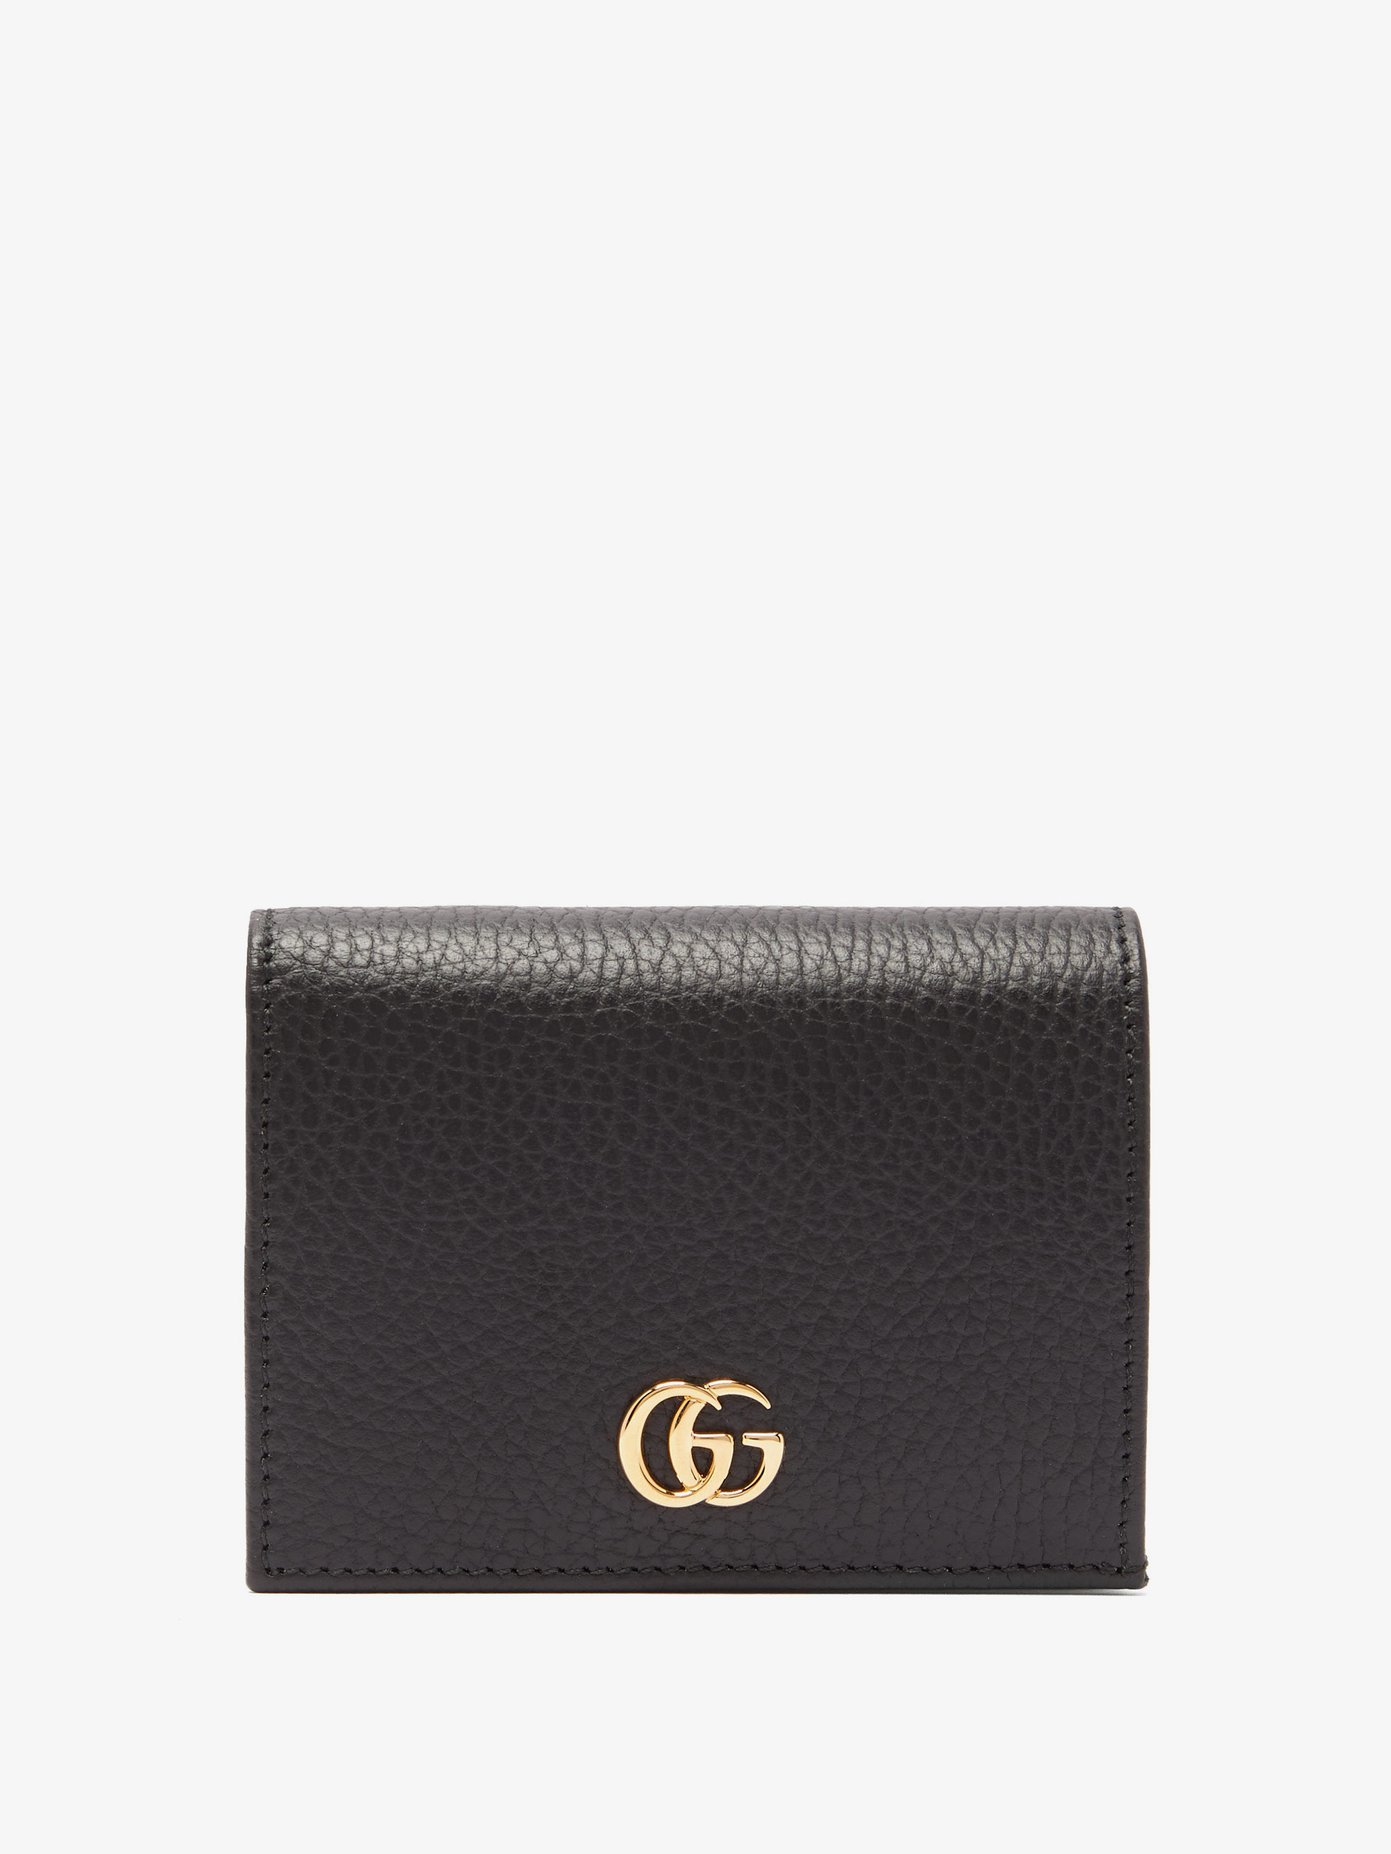 gg gucci wallet